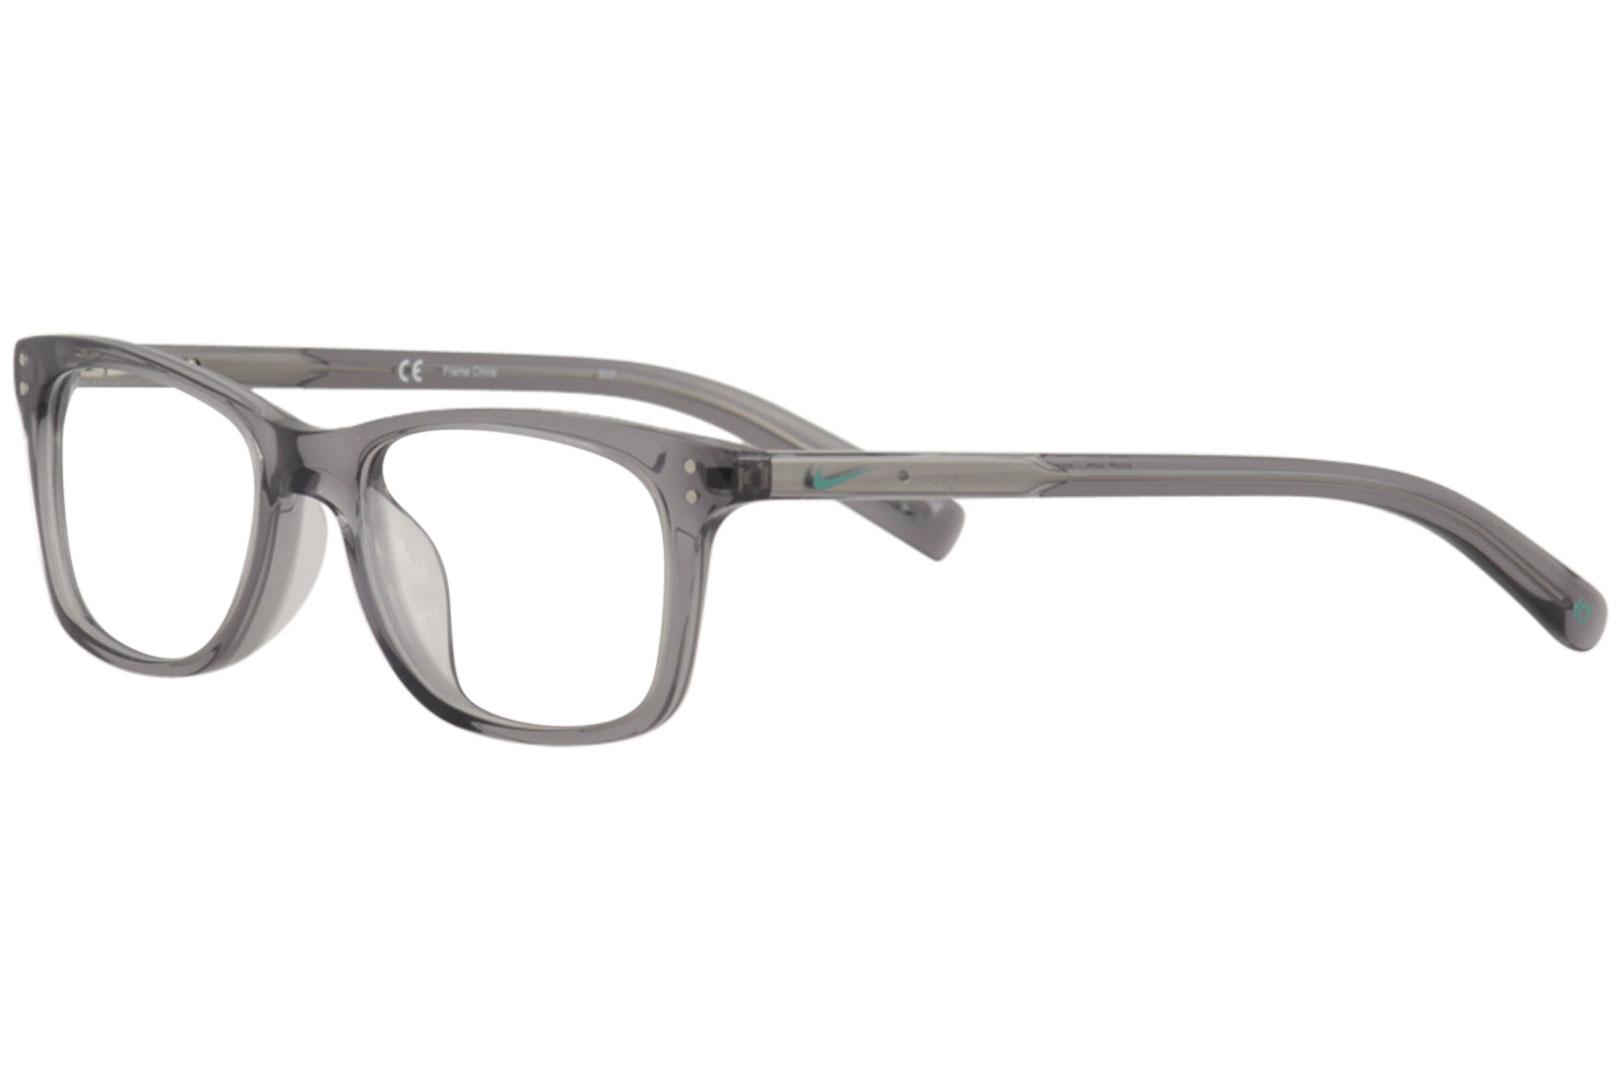 Nike Boy's Youth Eyeglasses 4KD Full Rim Optical Frame | JoyLot.com